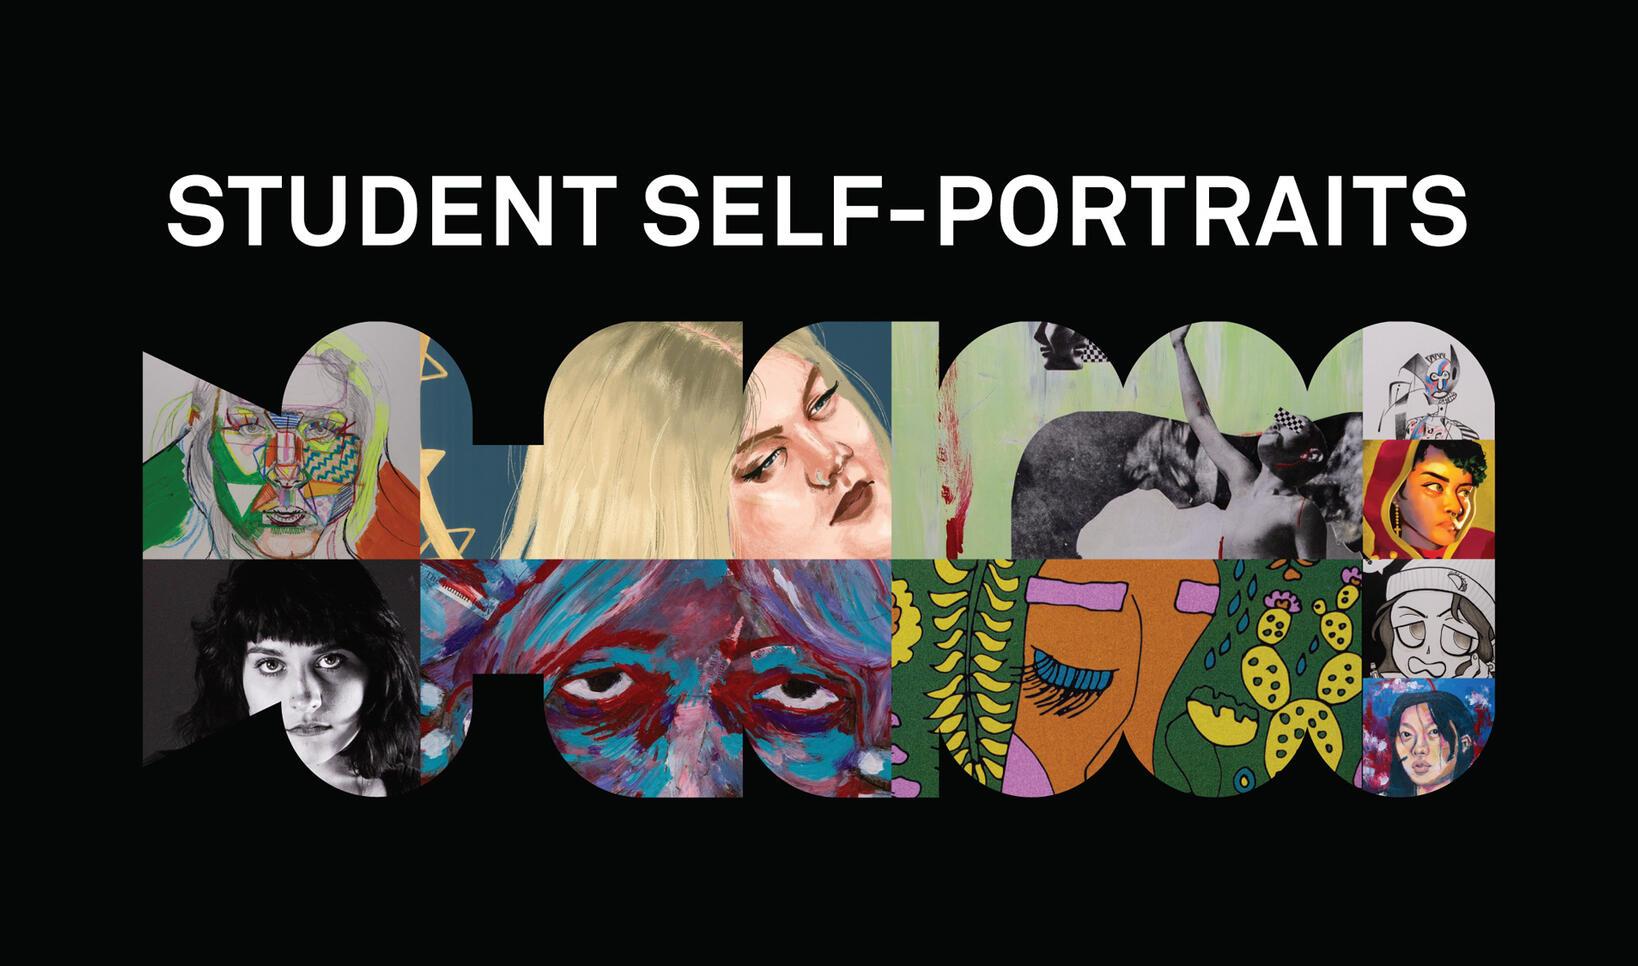 Composite of self-portraits